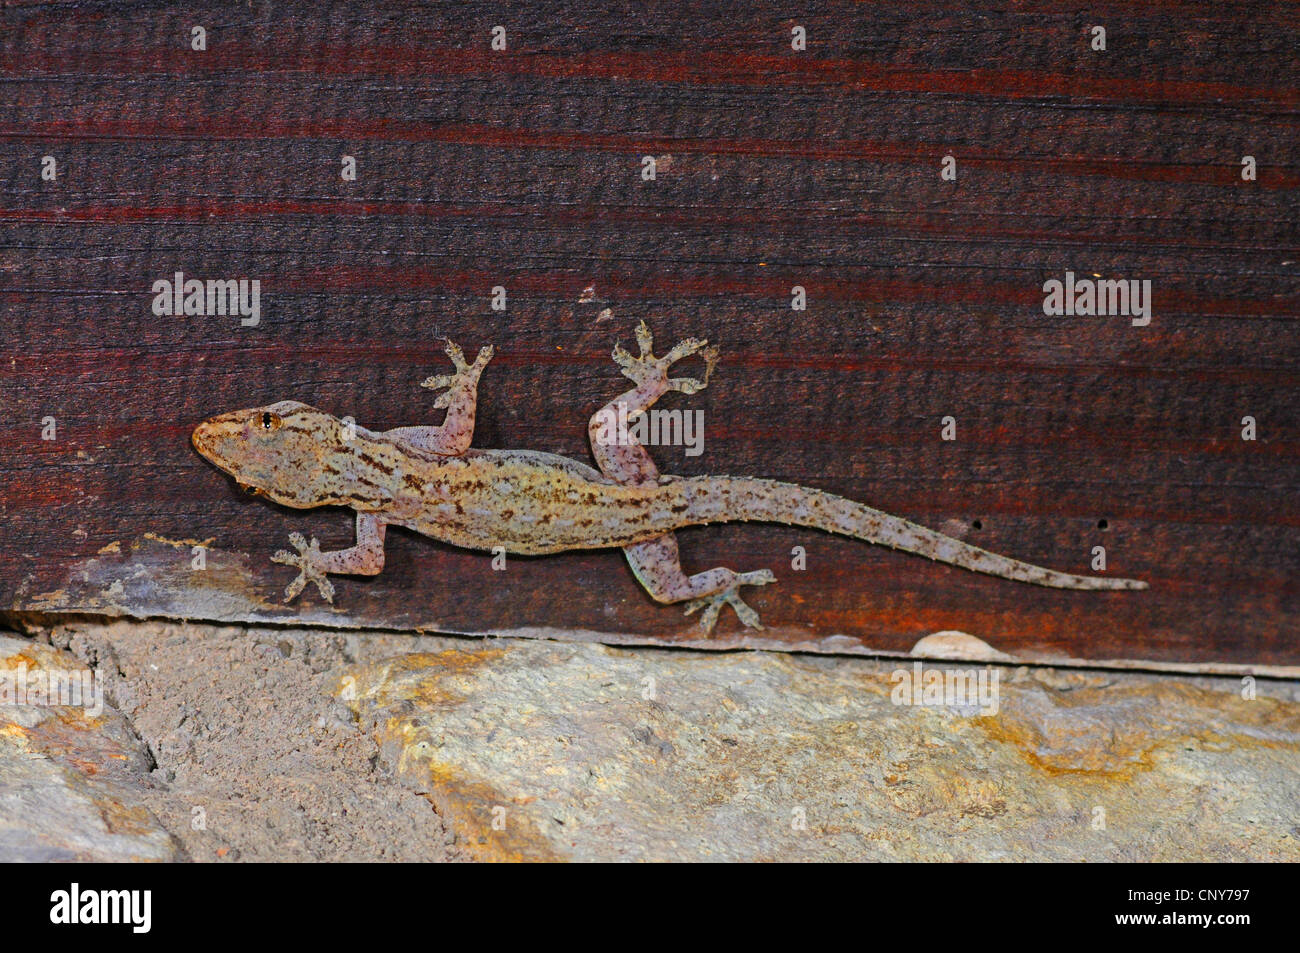 common house gecko (Hemidactylus frenatus  ), sitting at a wooden wall, Honduras, Roatan Stock Photo